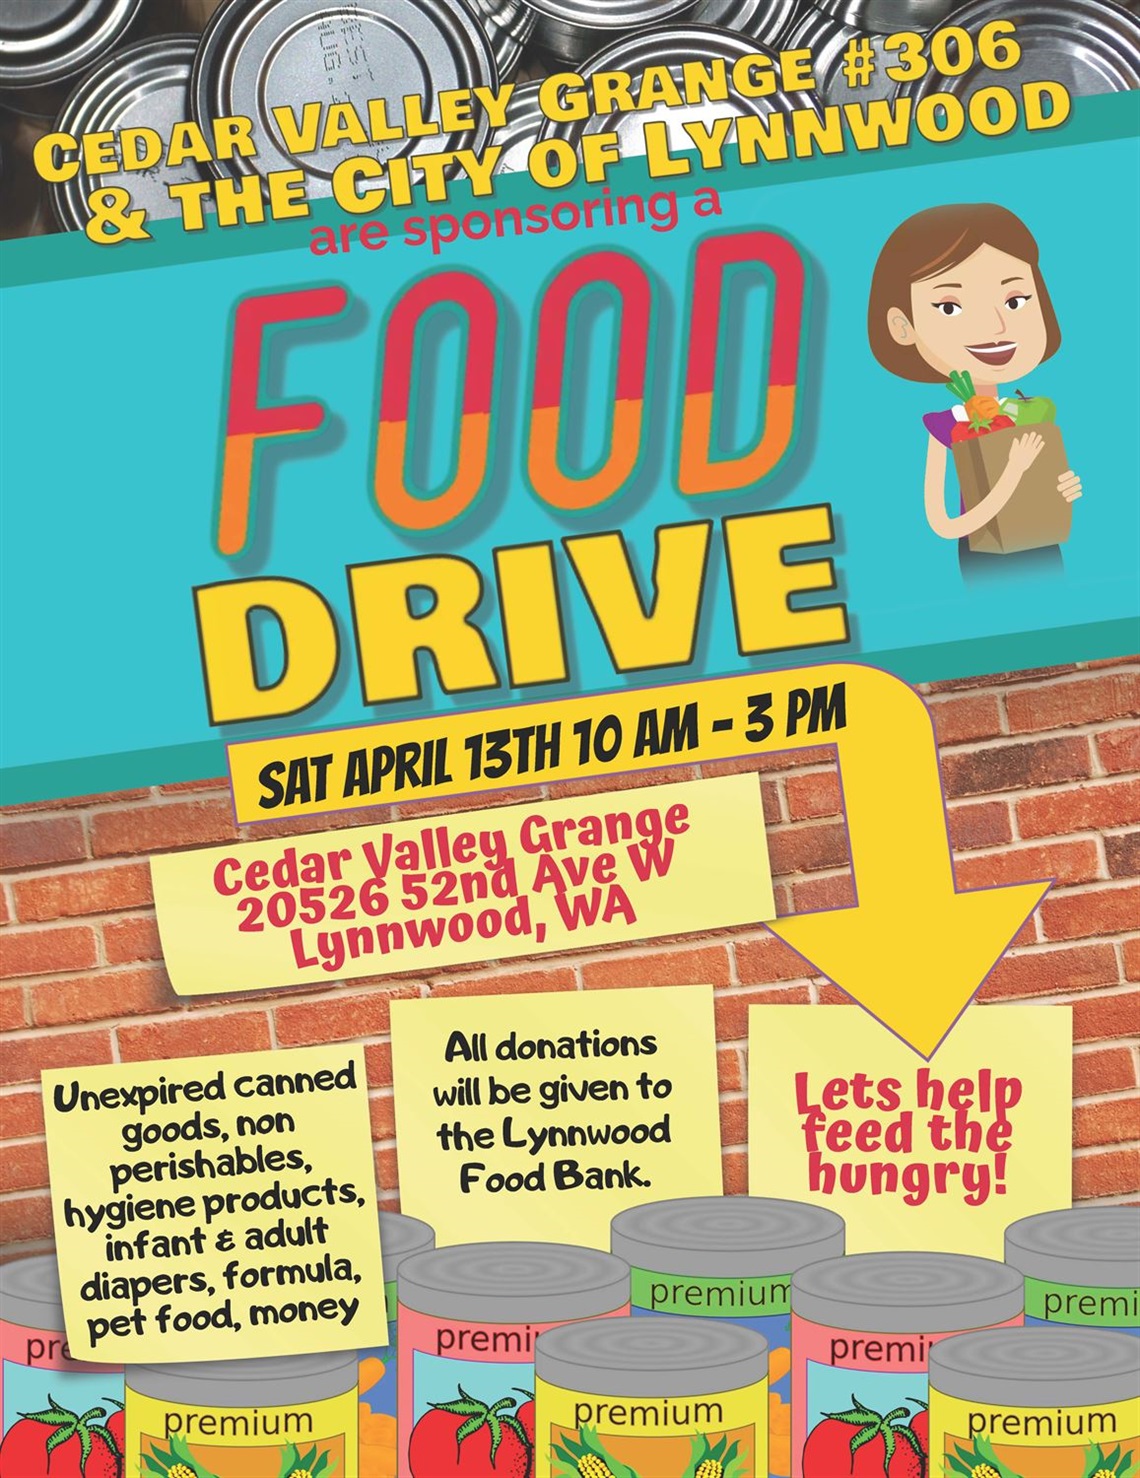 Food Drive Event Fundraiser Flyer.jpg